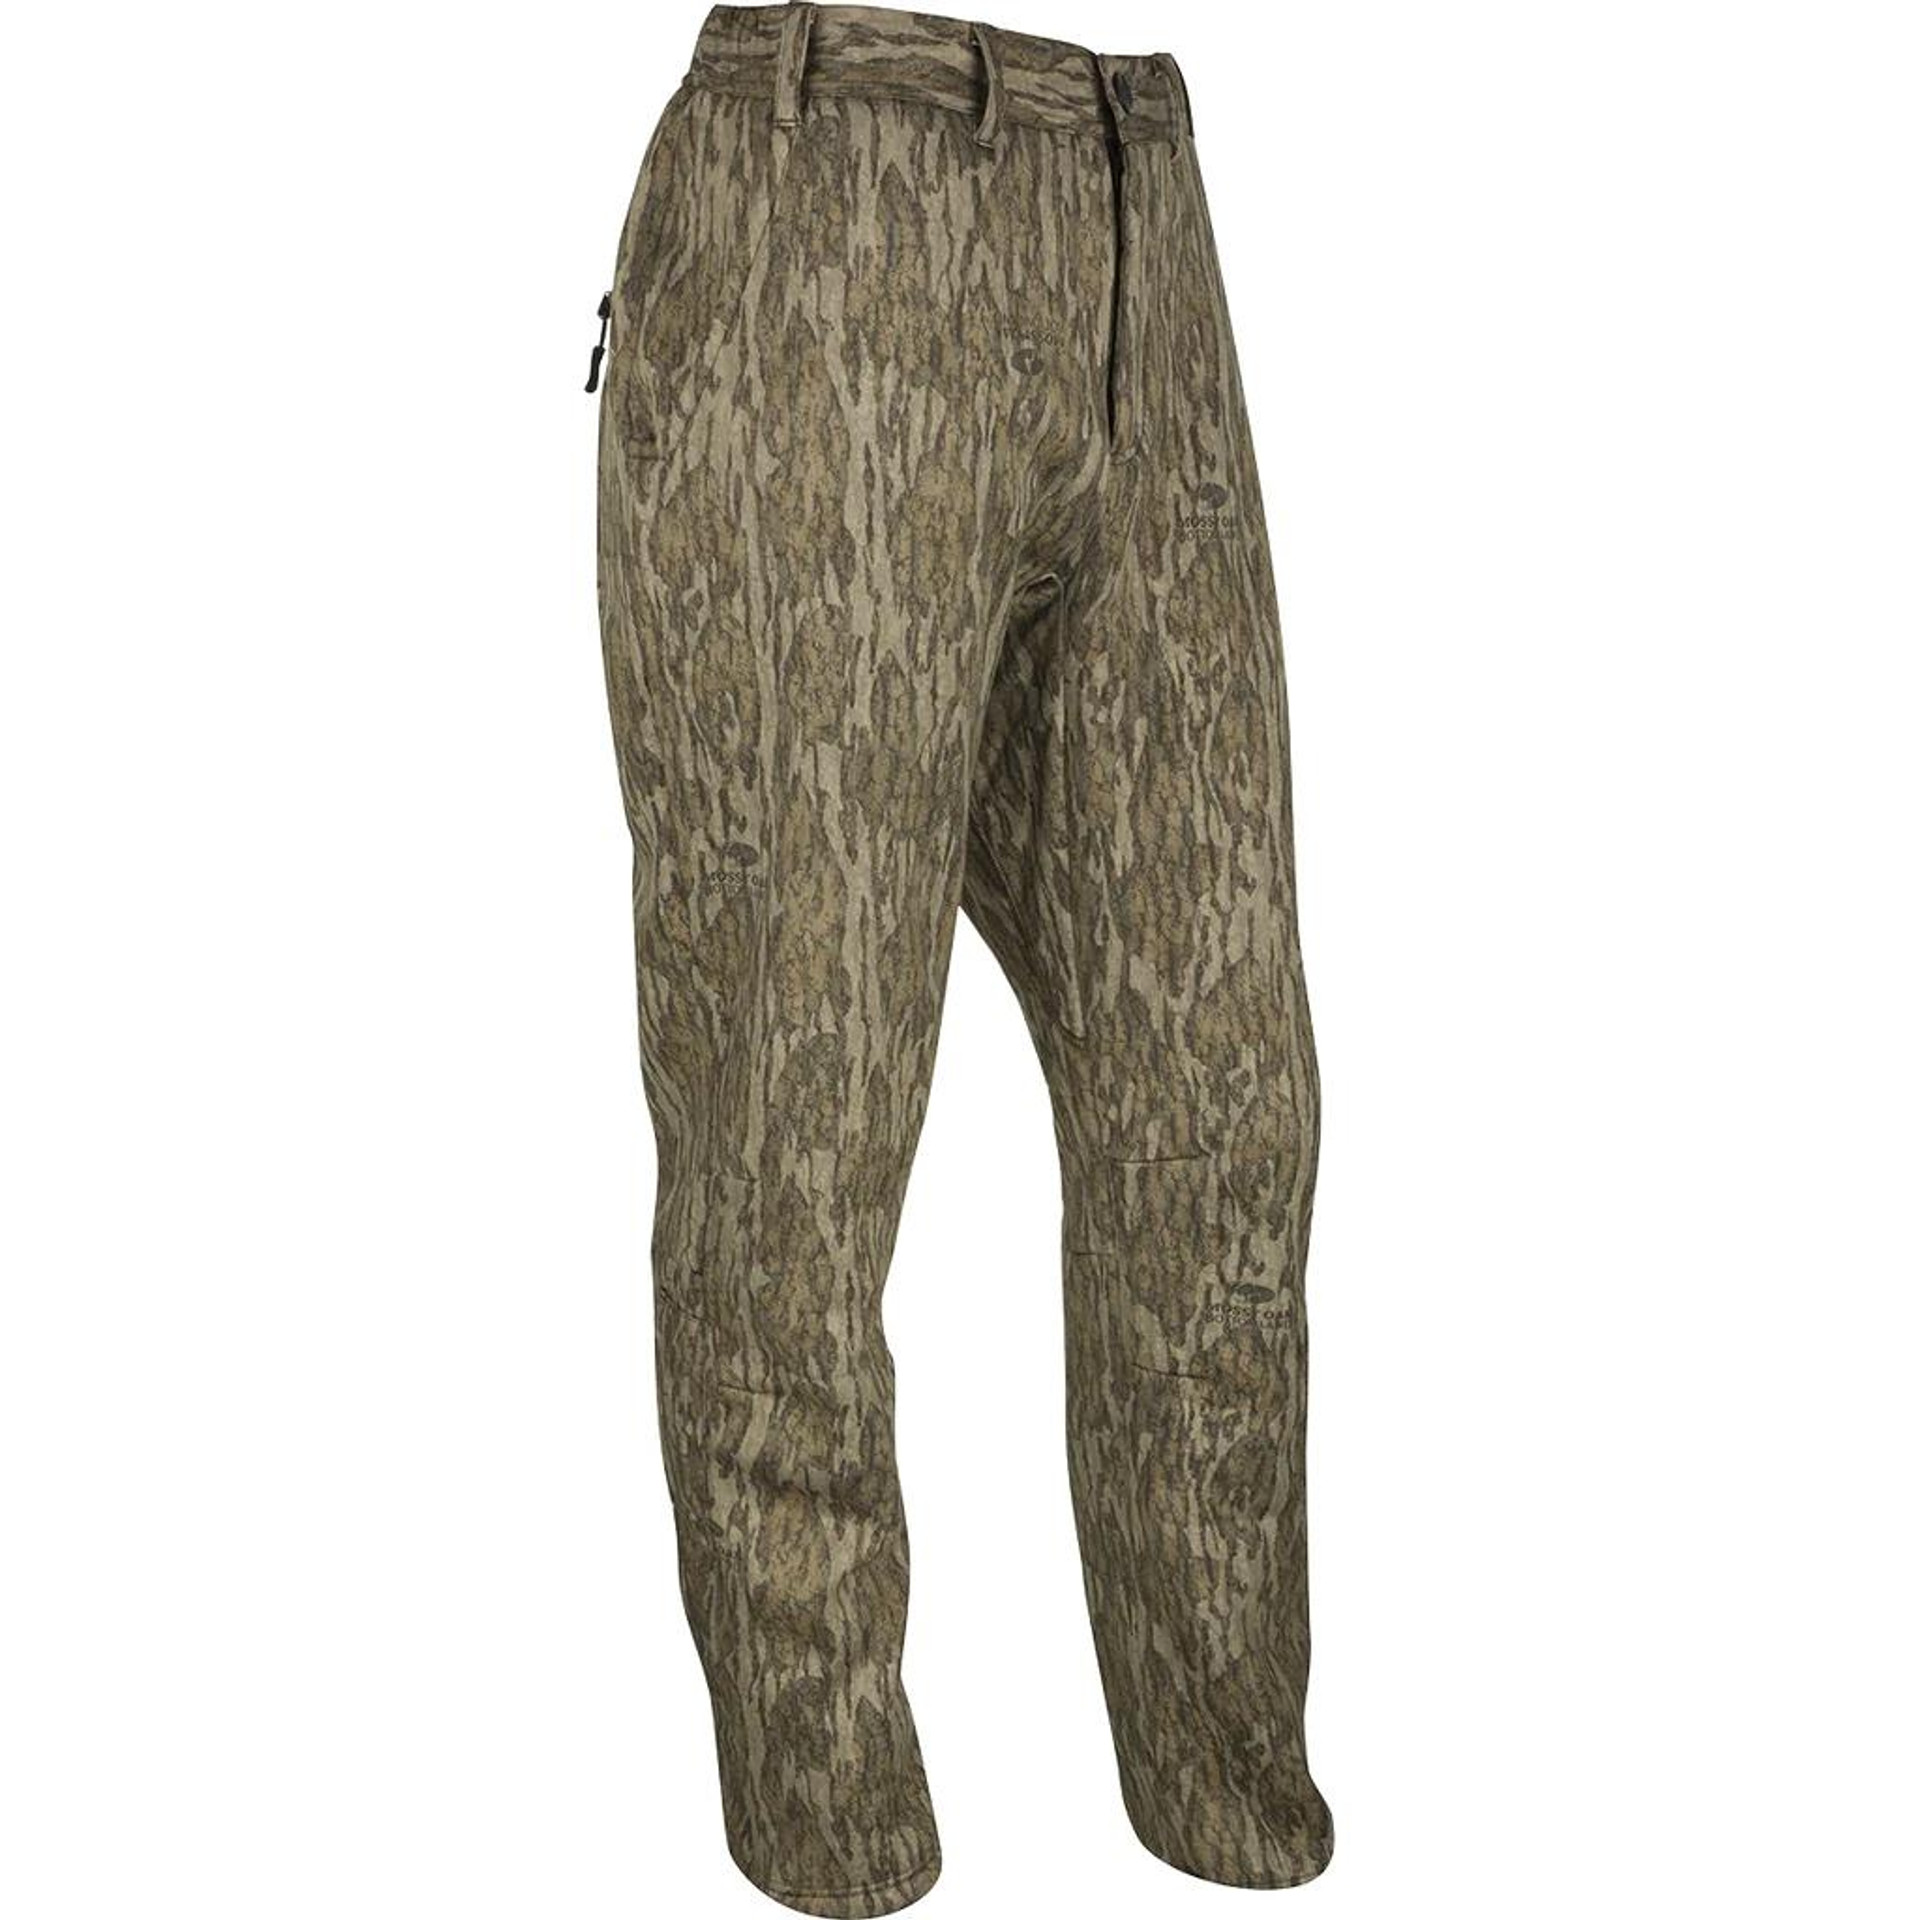 Drake MST Fleece-Lined Camo Pants - Simmons Sporting Goods